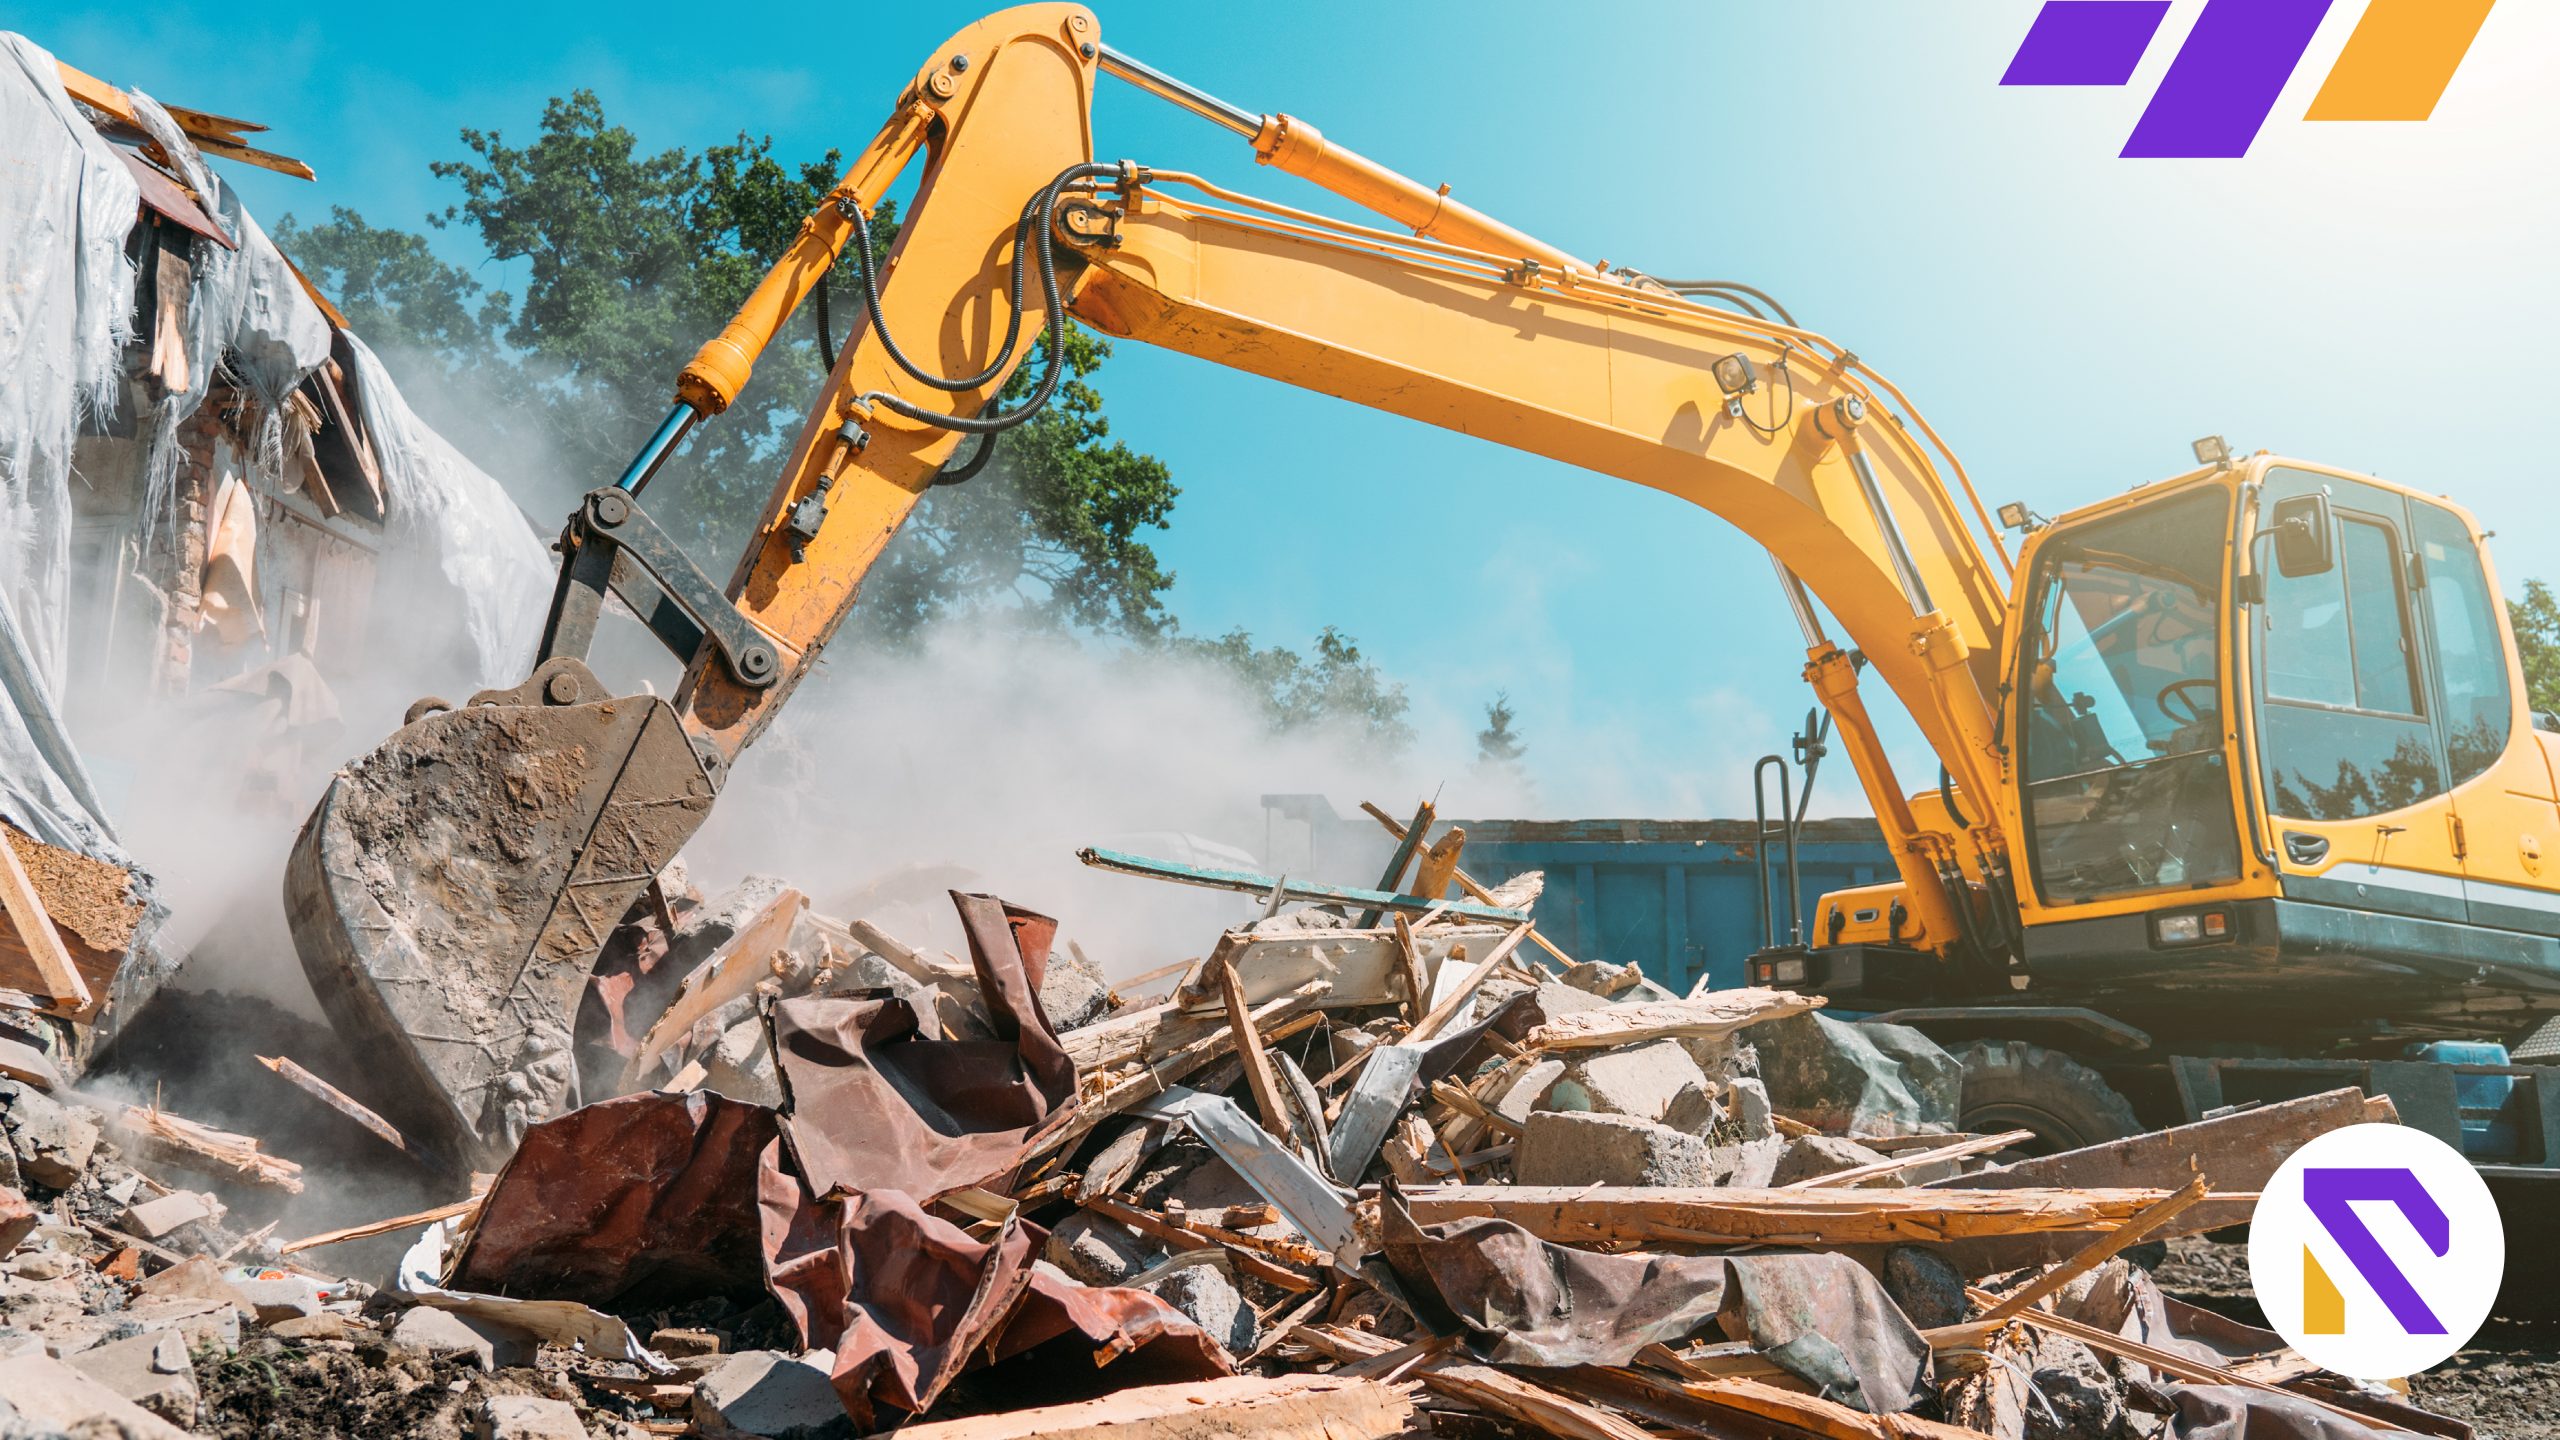 CDA demolished 700+ constructions in an anti-encroachment operation